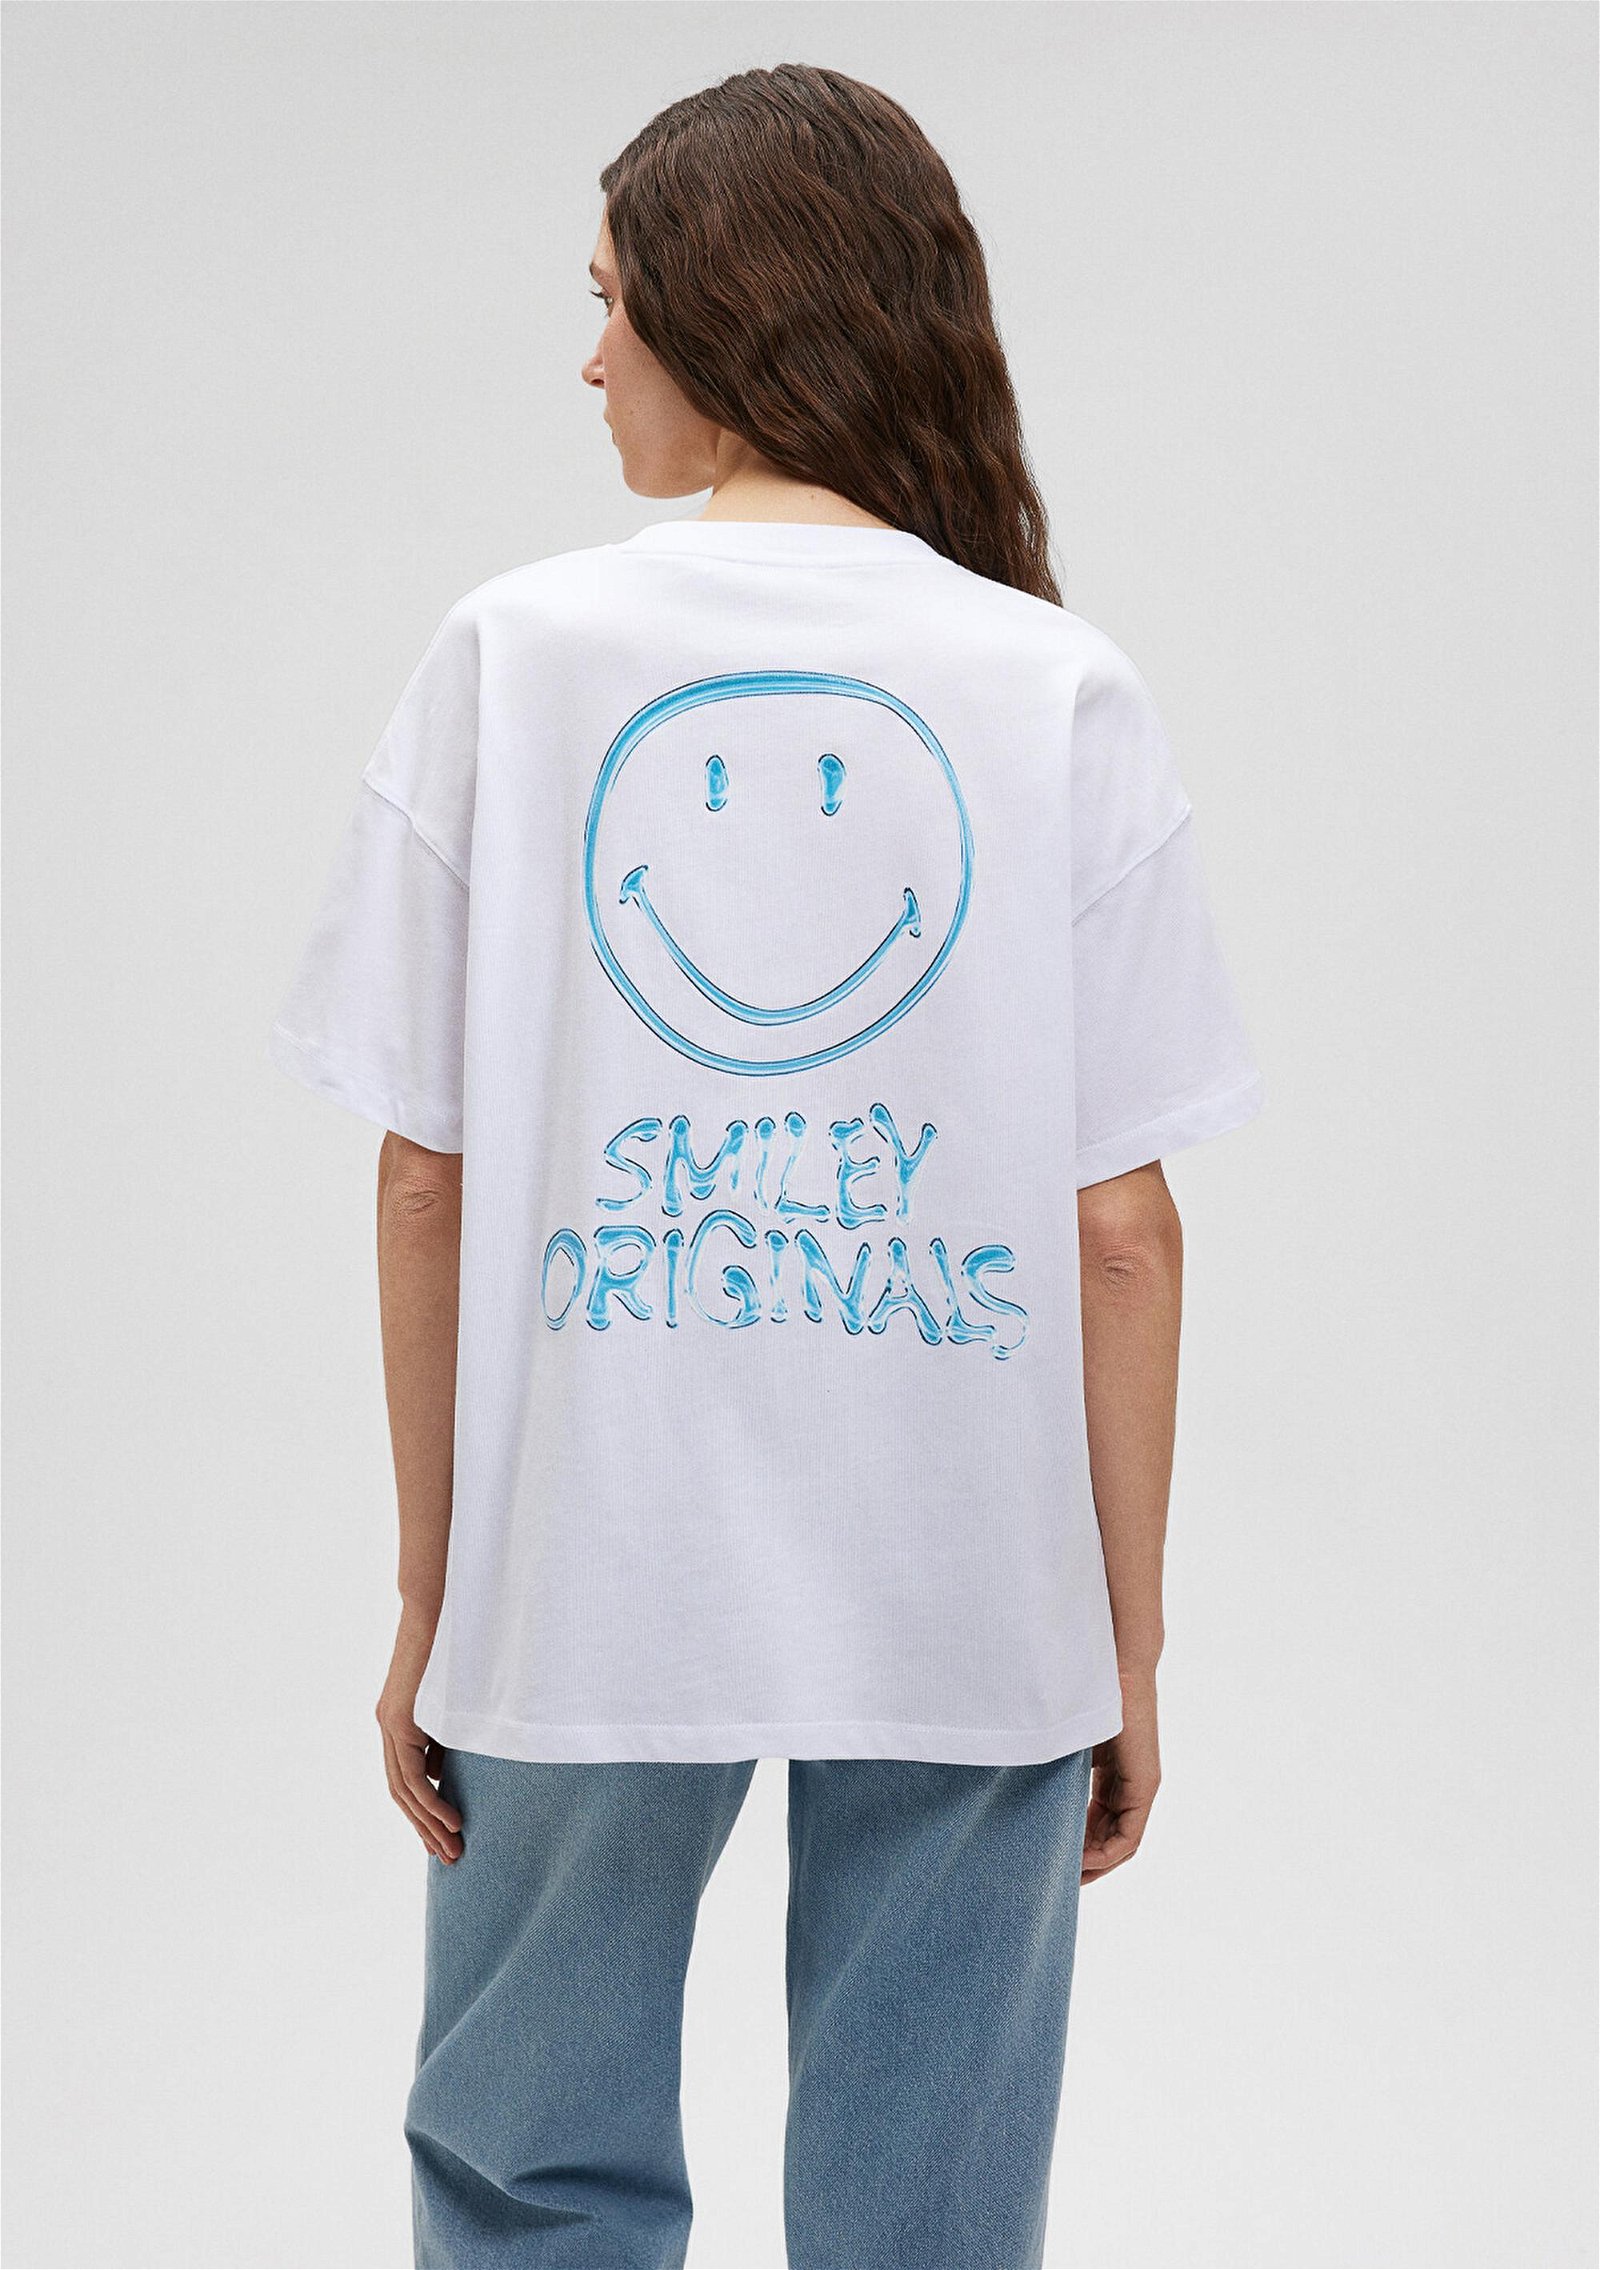 Mavi Smiley Originals Baskılı Beyaz Tişört Loose Fit / Bol Rahat Kesim 1612431-620